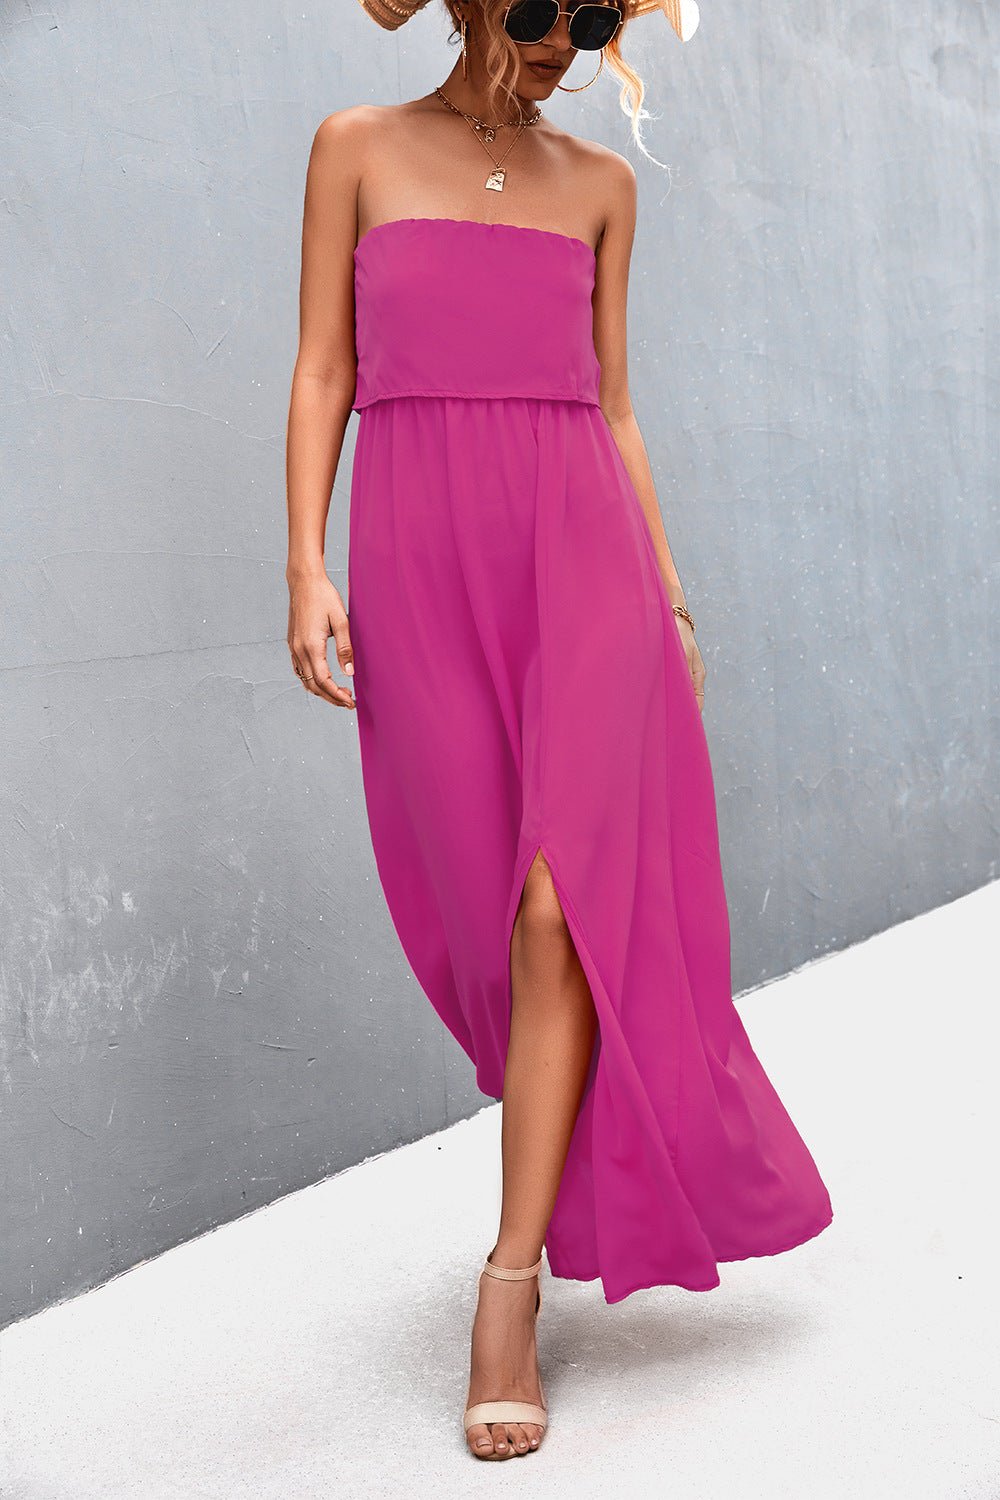 Strapless Split Maxi Dress - Fashion Girl Online Store